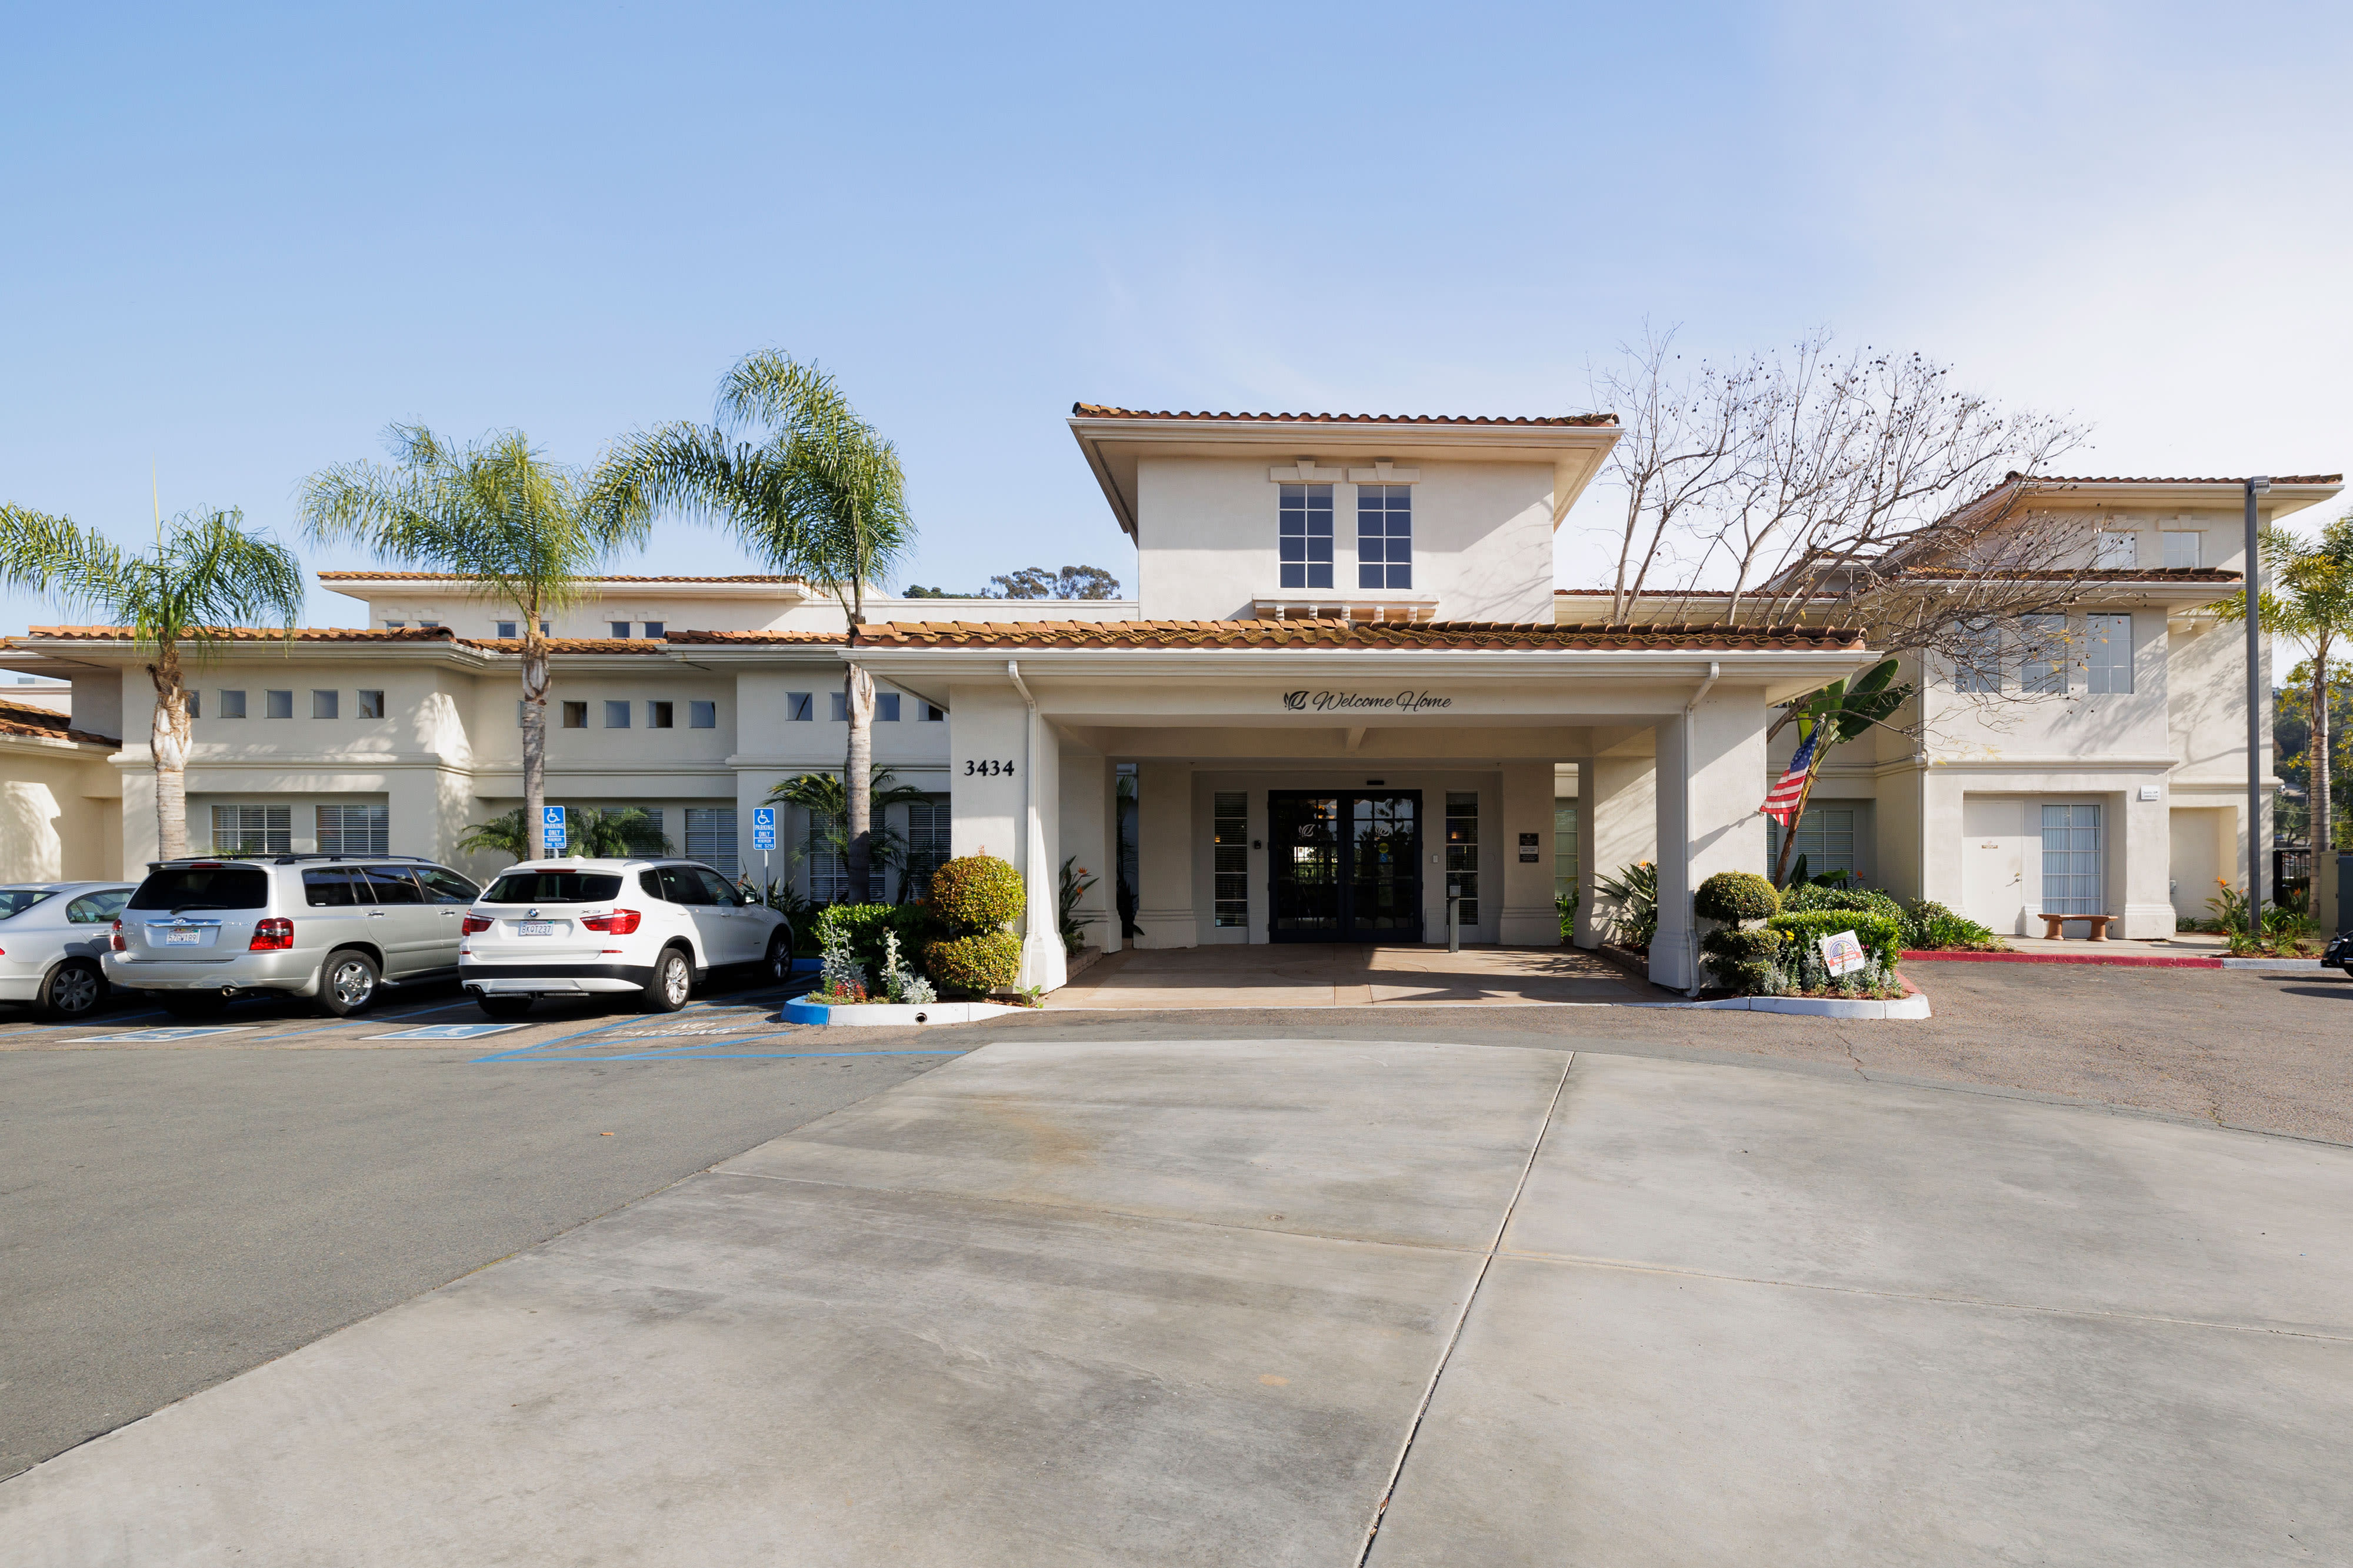 View of the entrance to Pacifica Senior Living Bonita in Chula Vista, California